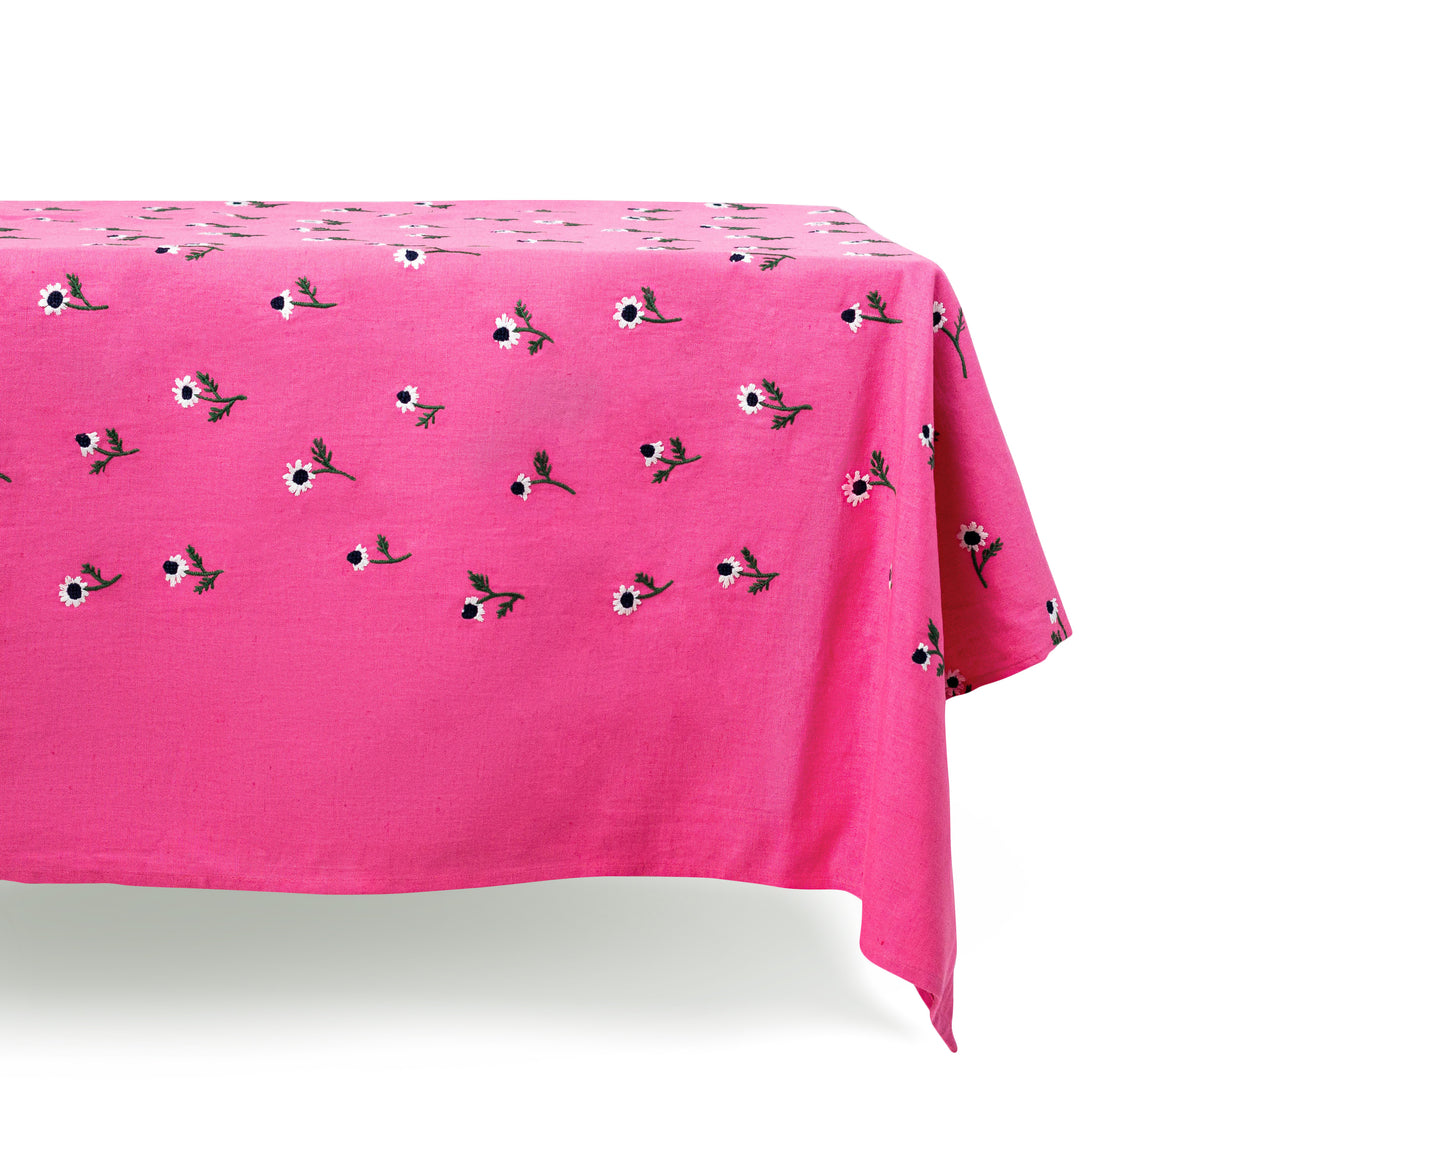 Manzanilla Bougainvillea Rectangular Tablecloth for 6